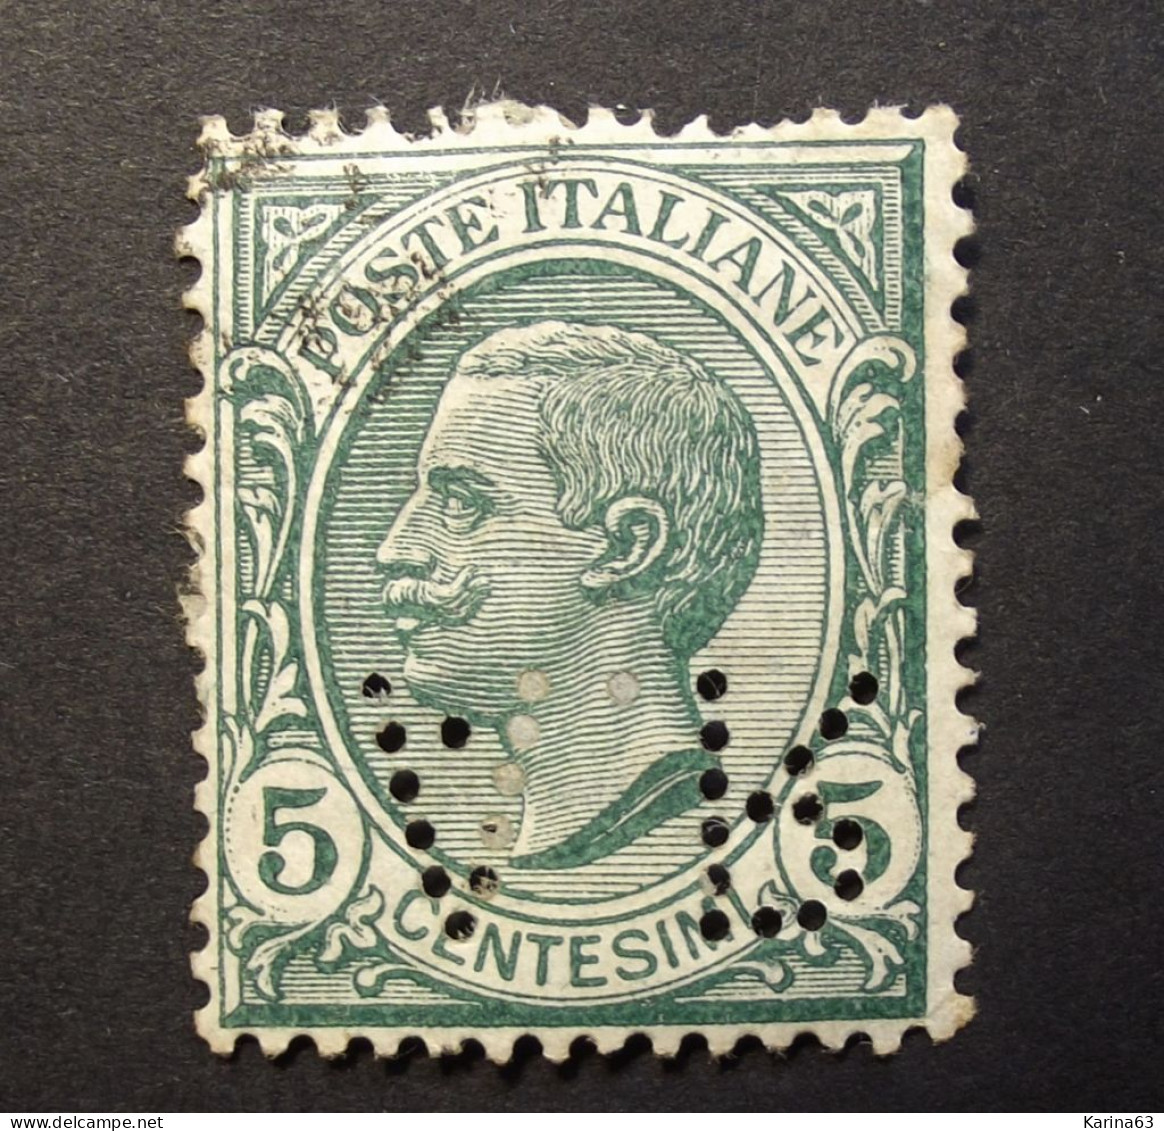 Italia - Italy - 1906 -  Perfin - Lochung -  A R -  A.Rejna - Milano  -  Cancelled - Afgestempeld